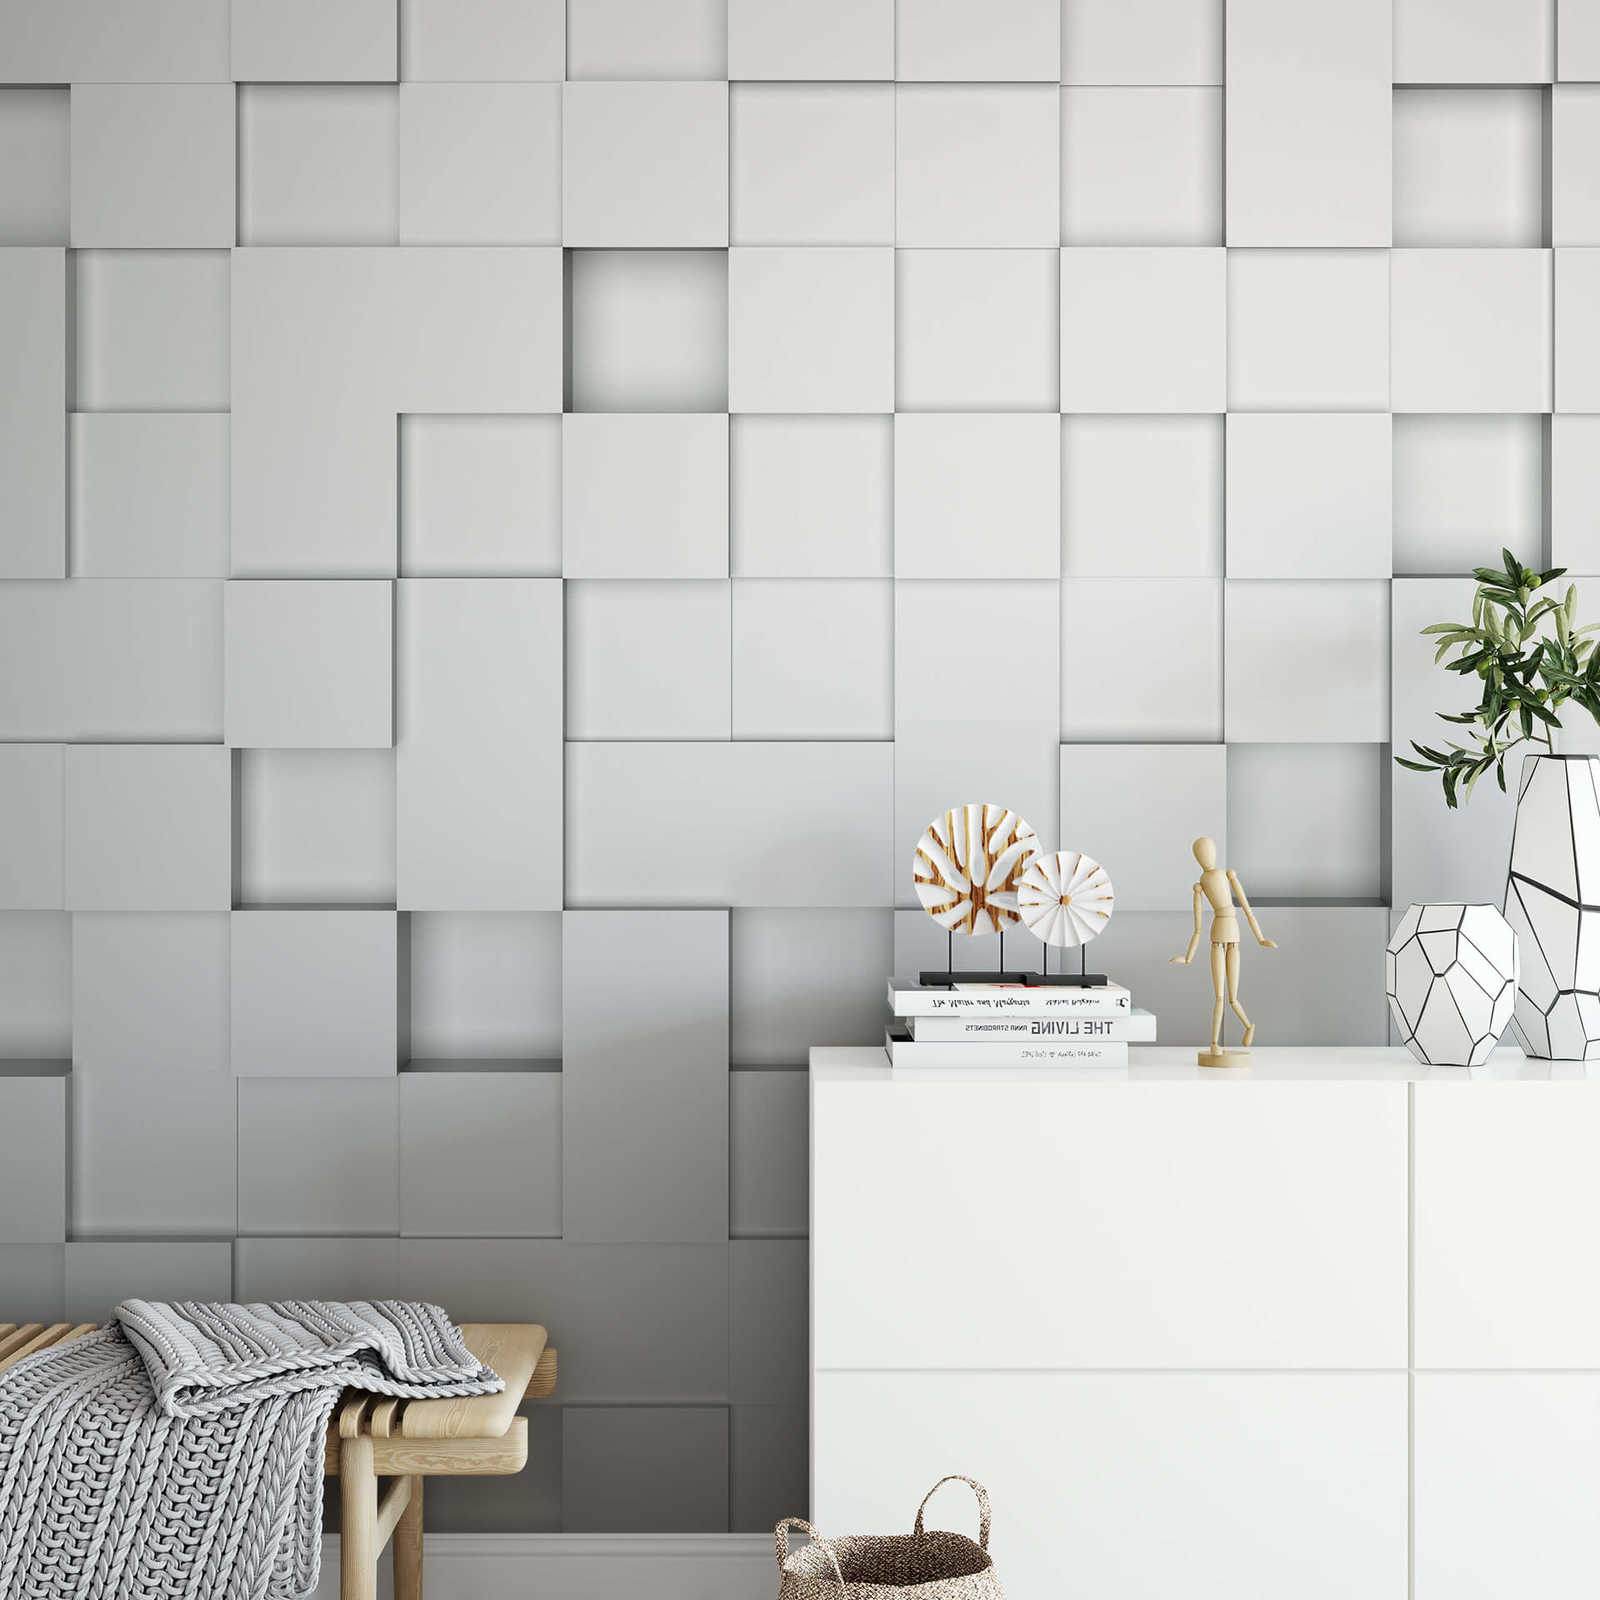             Photo wallpaper 3D cube pattern in portrait format - white, grey
        